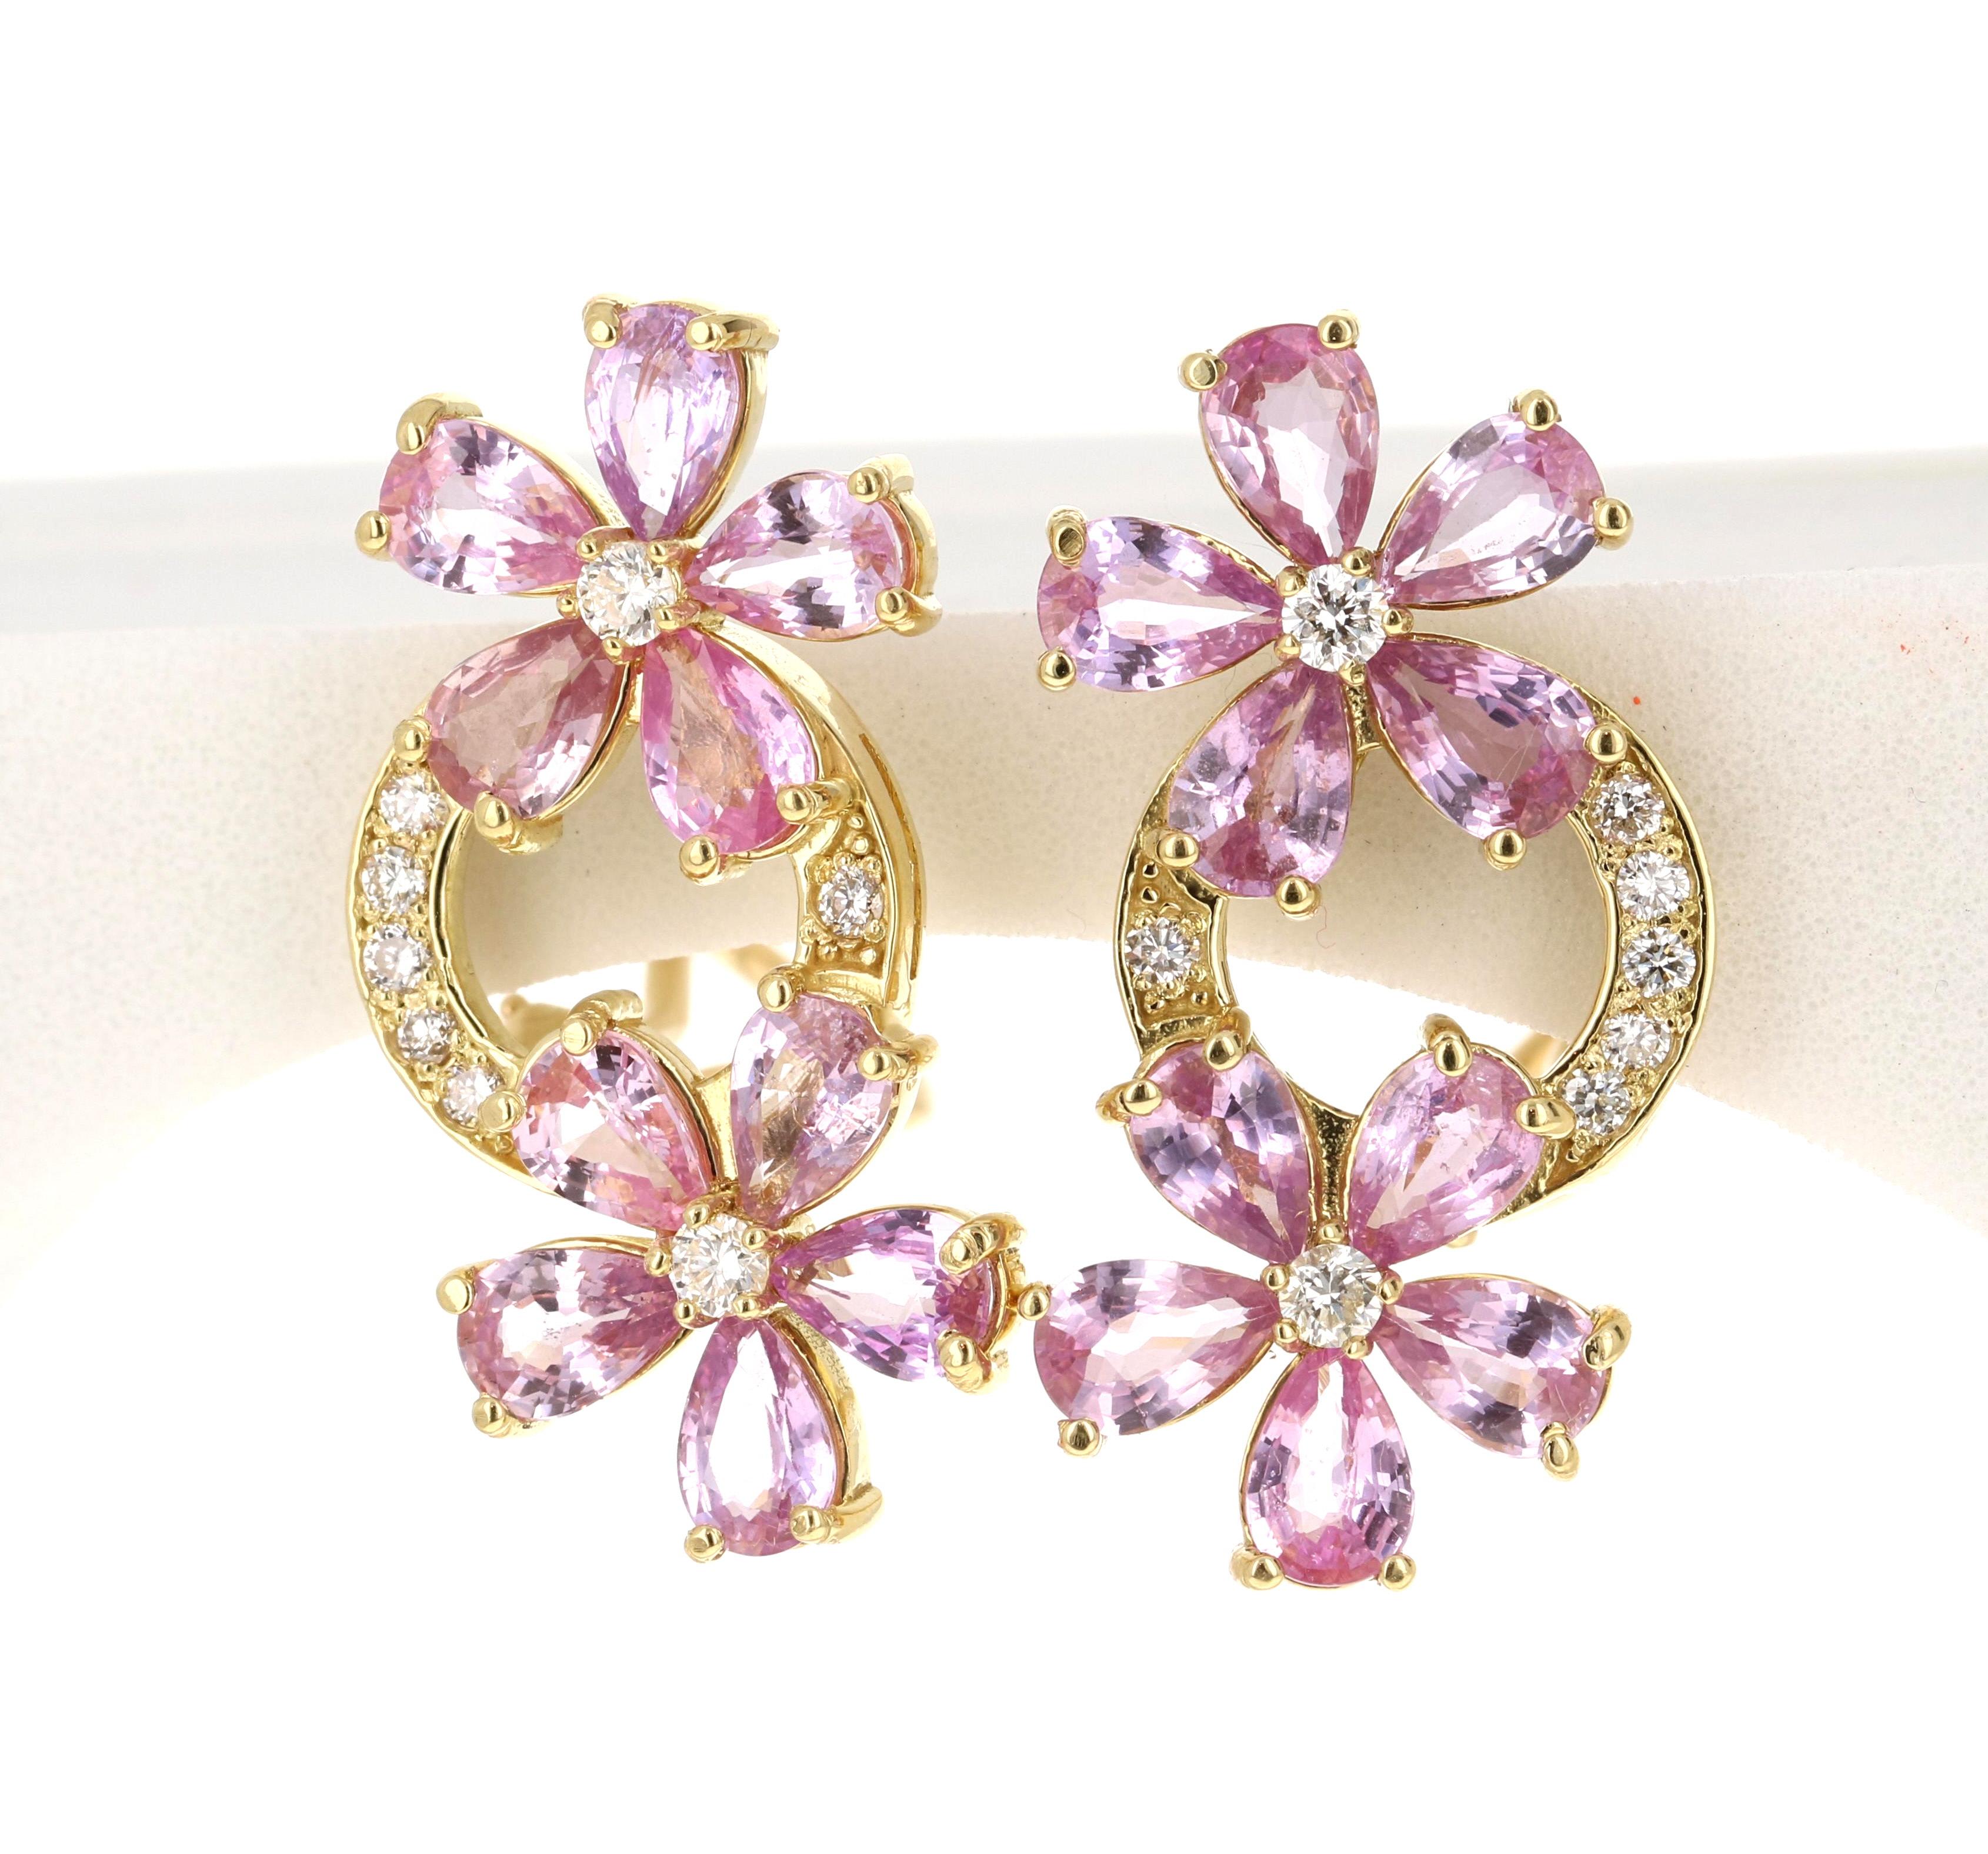 Contemporary 8.73 Carat Pink Sapphire Diamond 18 Karat Yellow Gold Earrings